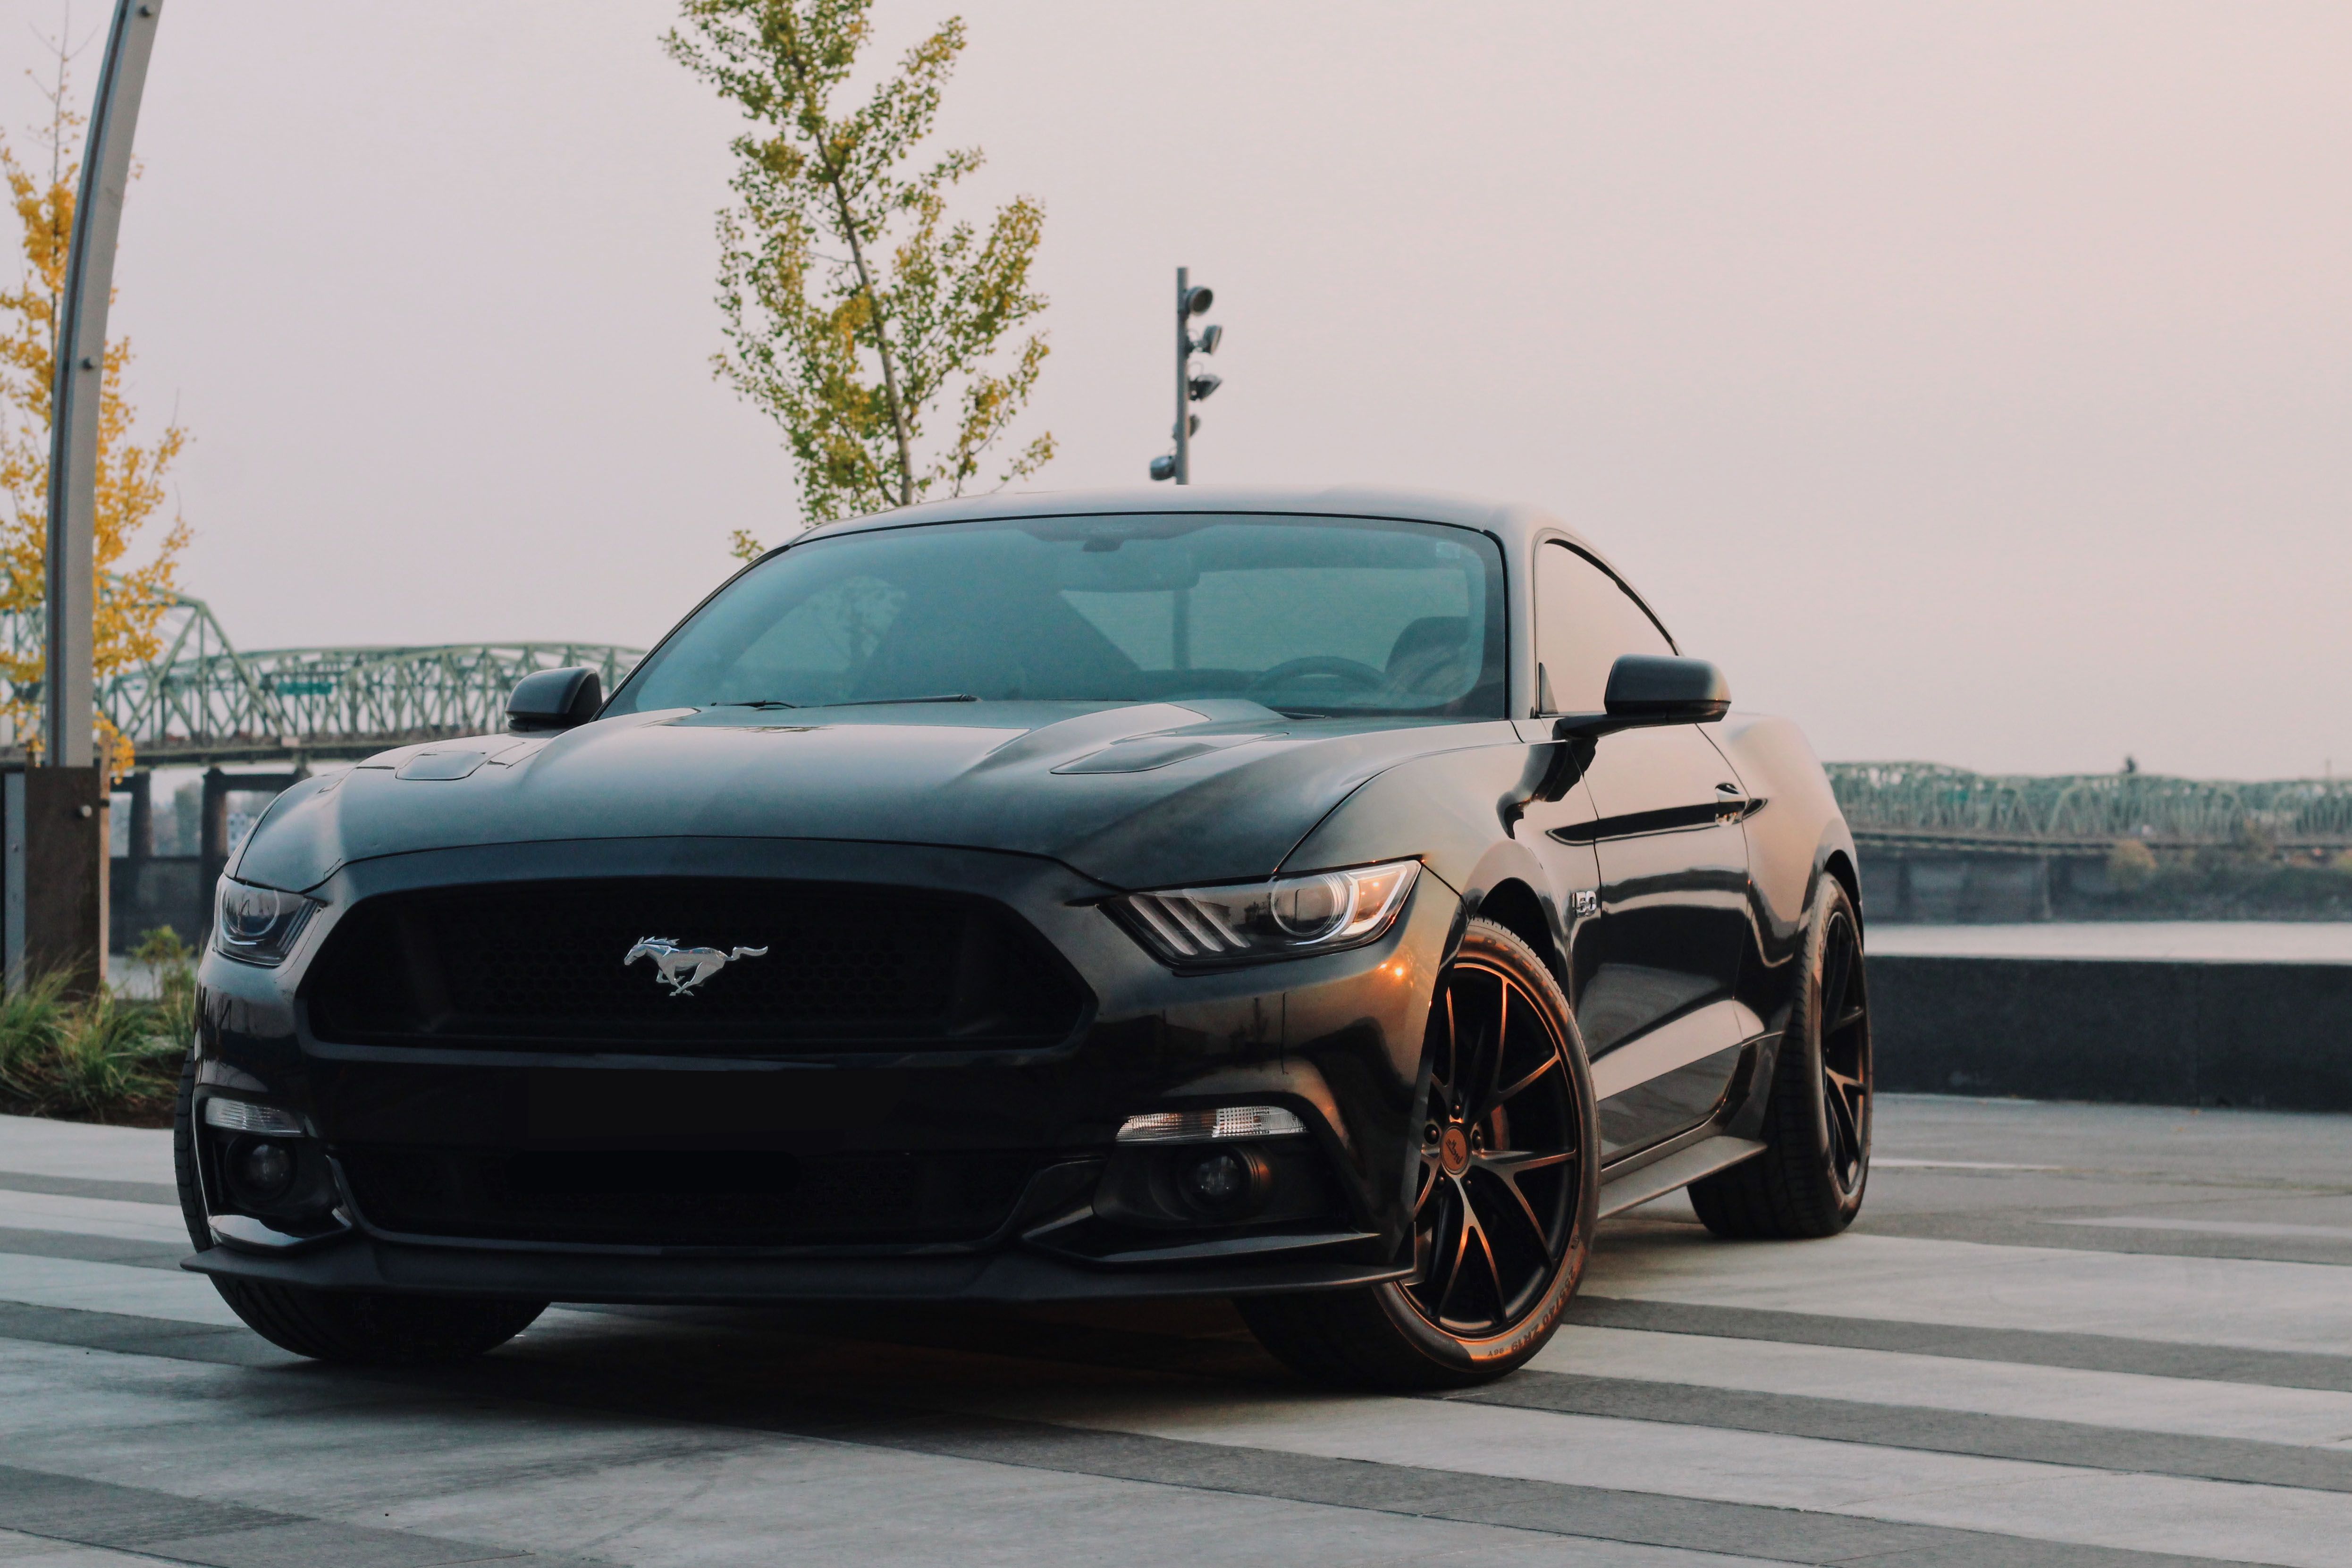 Fondos de pantalla de Ford Mustang - FondosMil